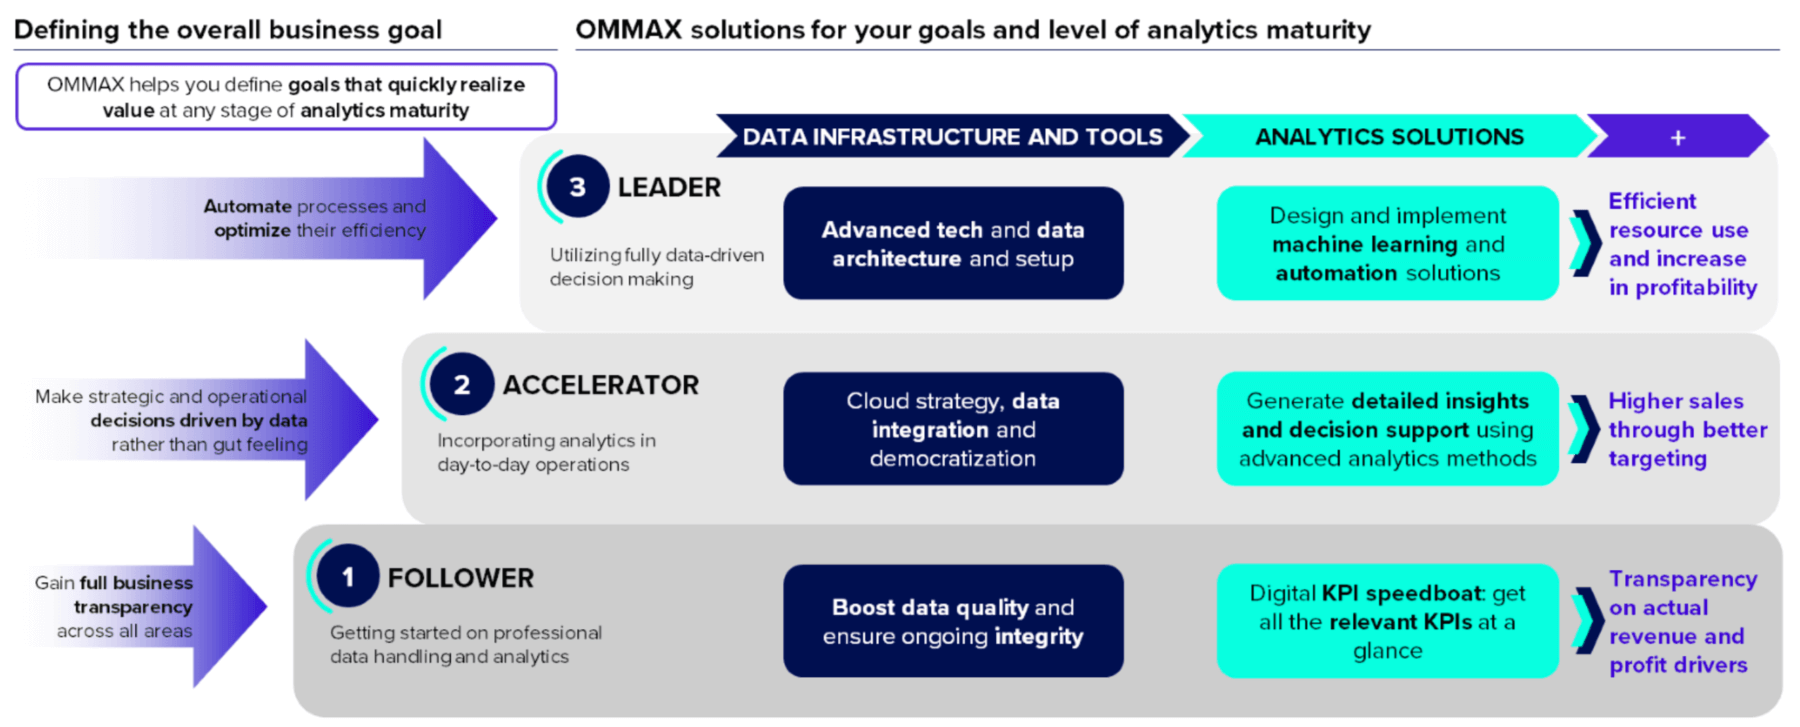 OMMAX's analytics maturity framework: From follower to leader in analytics